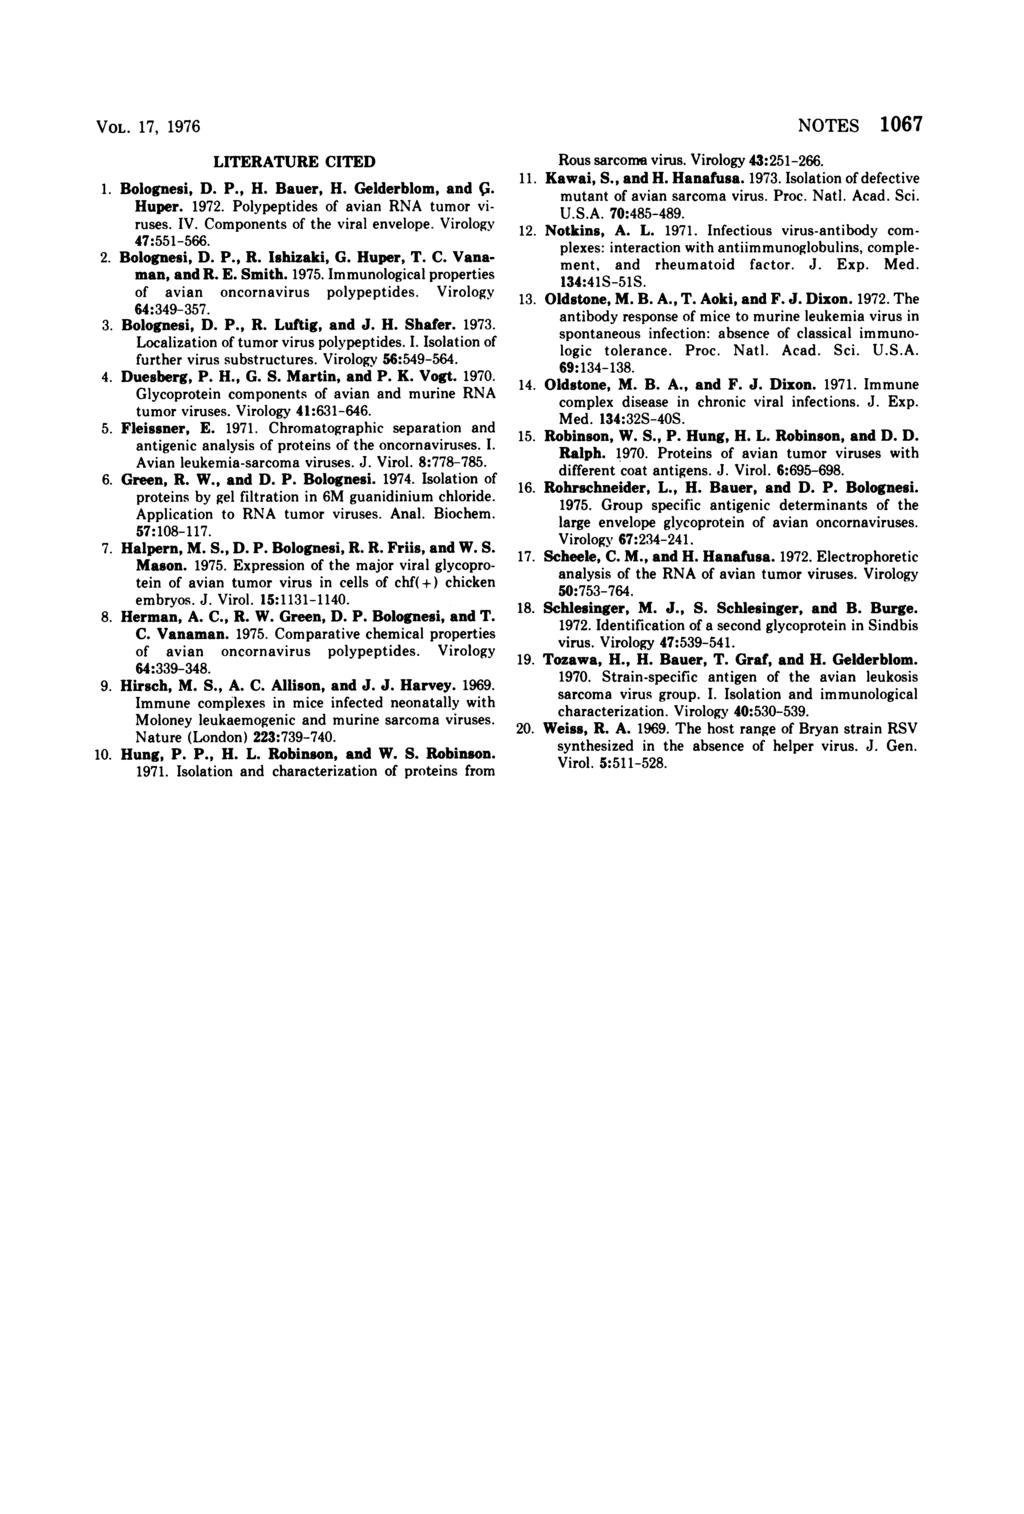 VOL. 17, 1976 LITERATURE CITED 1. Bolognesi, D. P., H. Bauer, H. Gelderblom, and 6. Huper. 1972. Polypeptides of avian RNA tumor viruses. IV. Components of the viral envelope. Virology 47:551-566. 2.